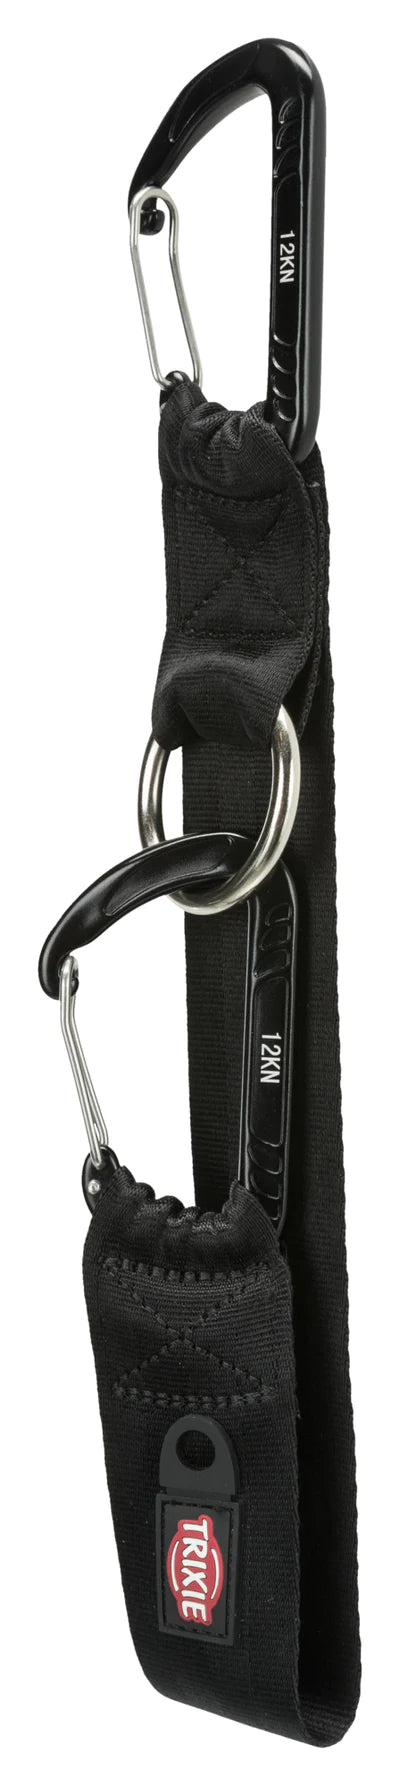 TRIXIE Universal belt strap